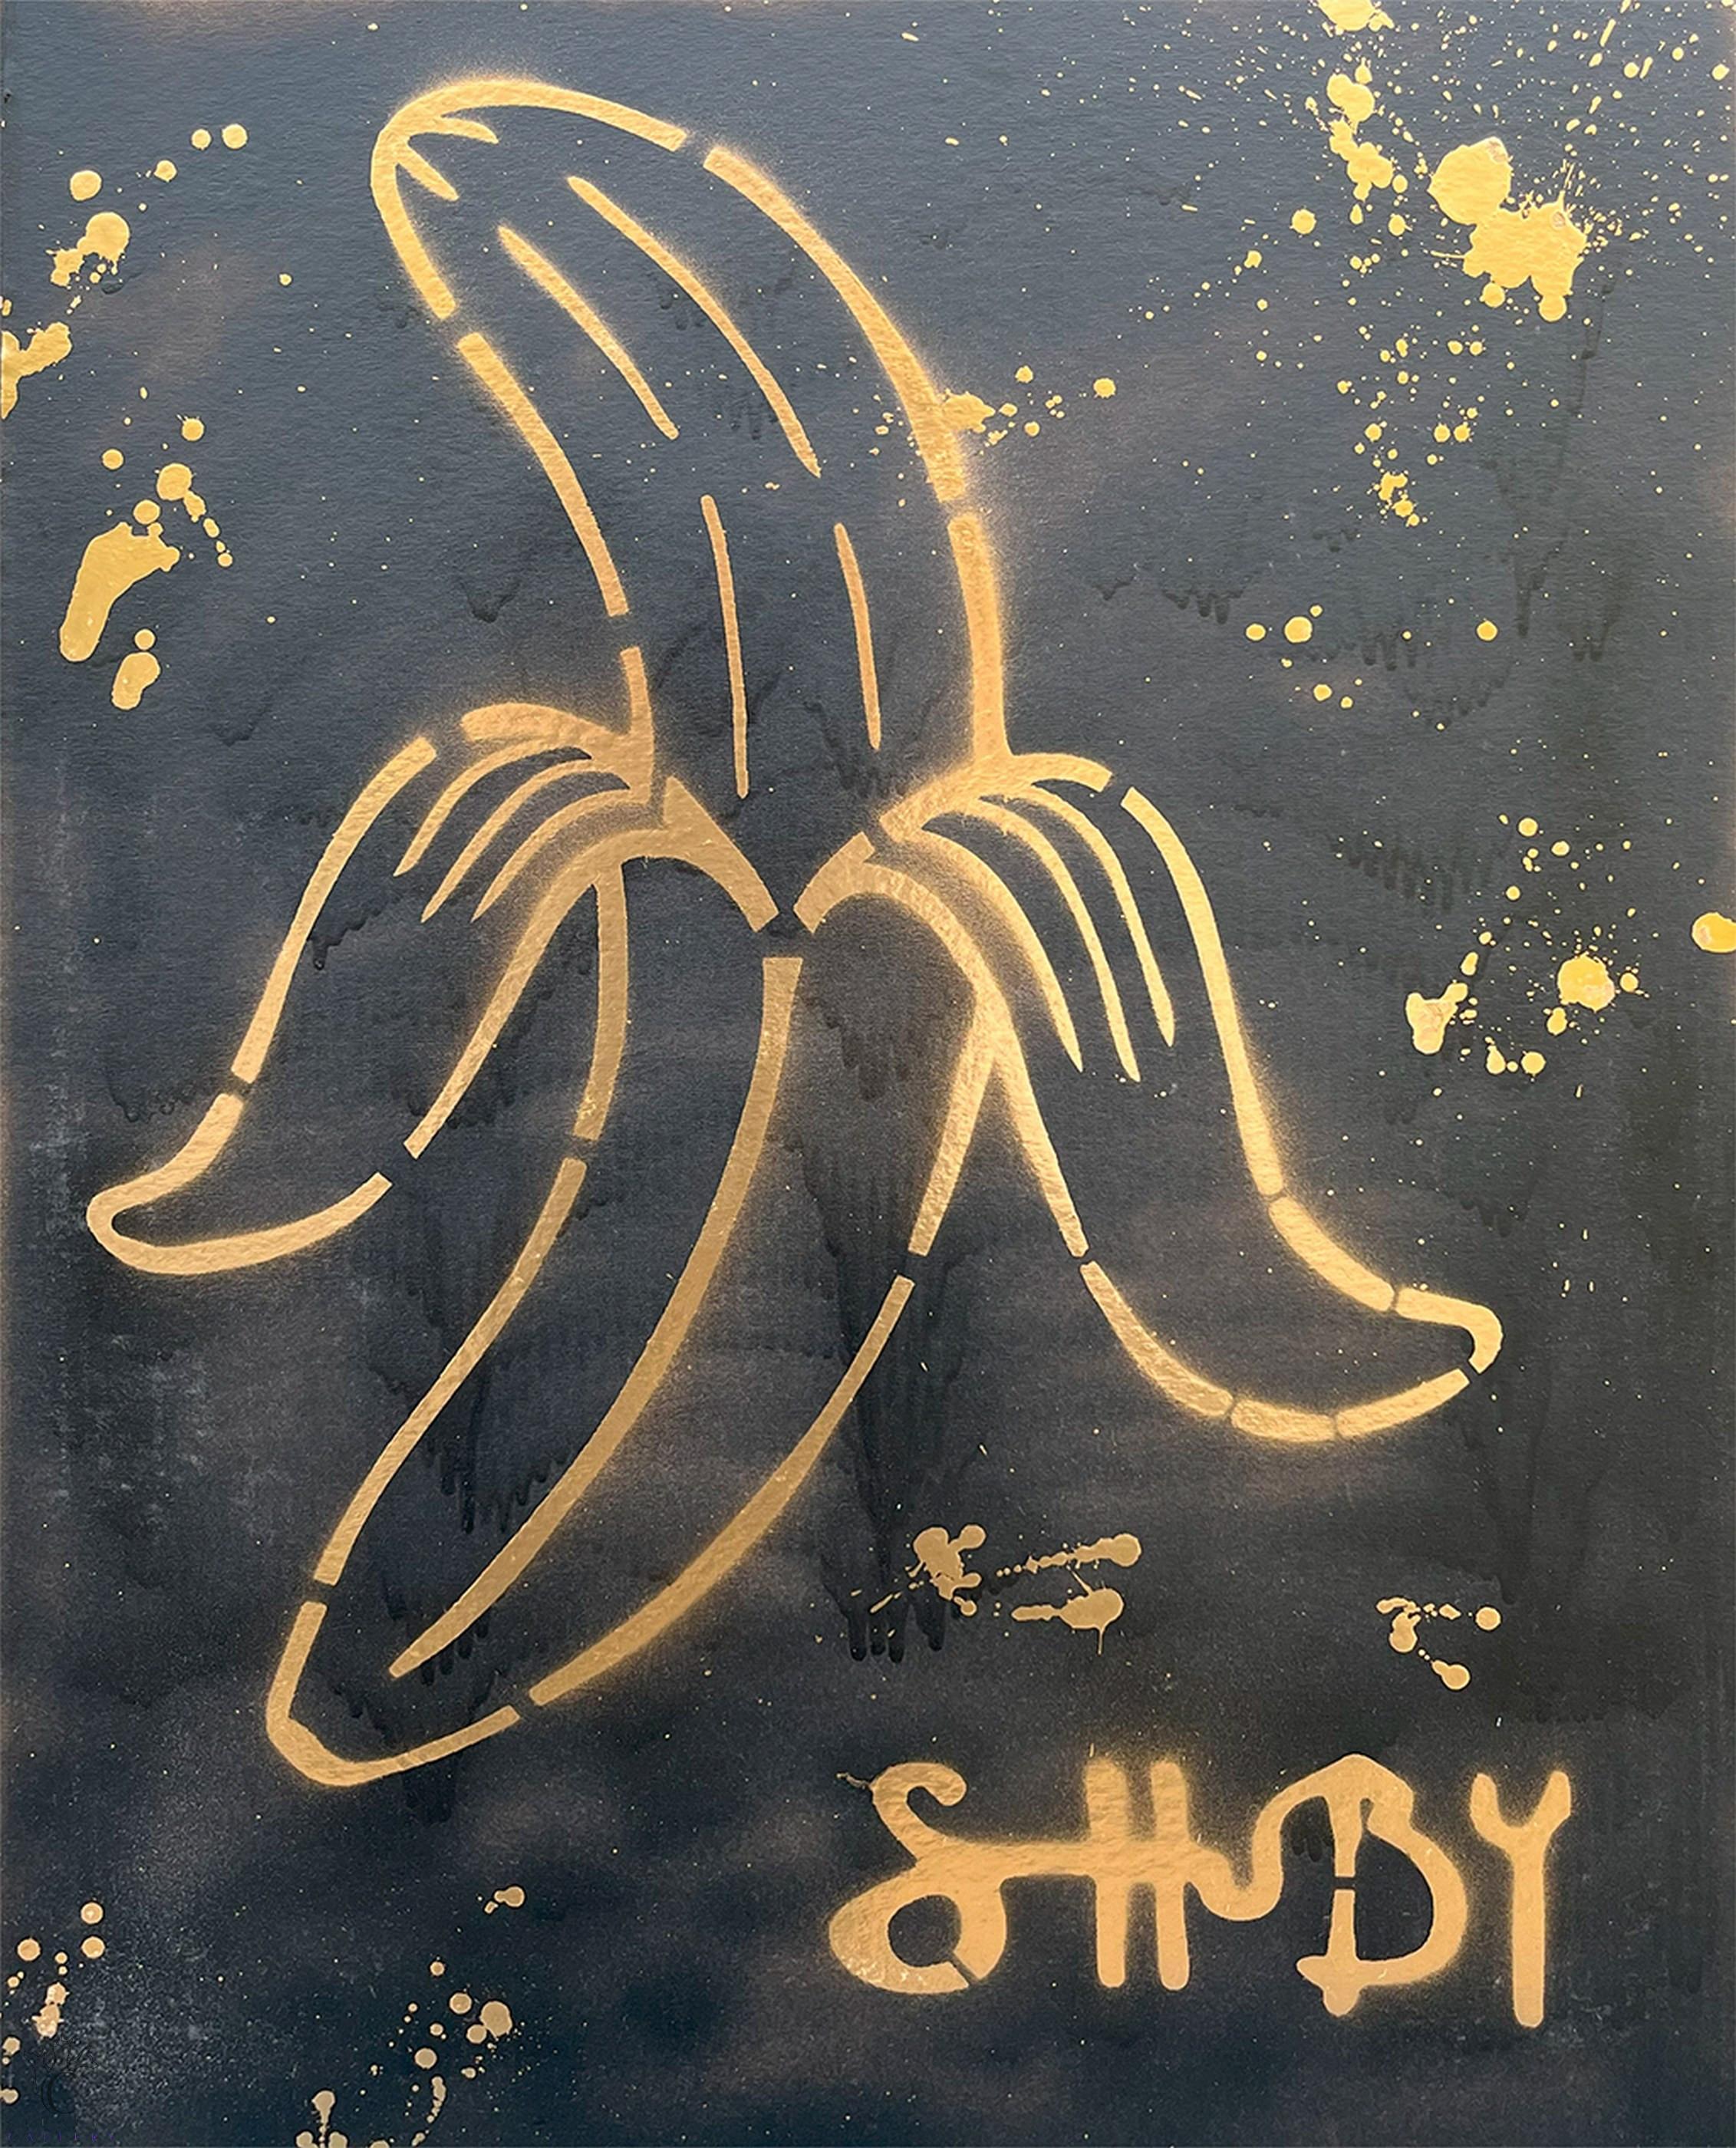 Shuby Figurative Print - Banana (Gold) (Pop Art, Warhol, Street Art)